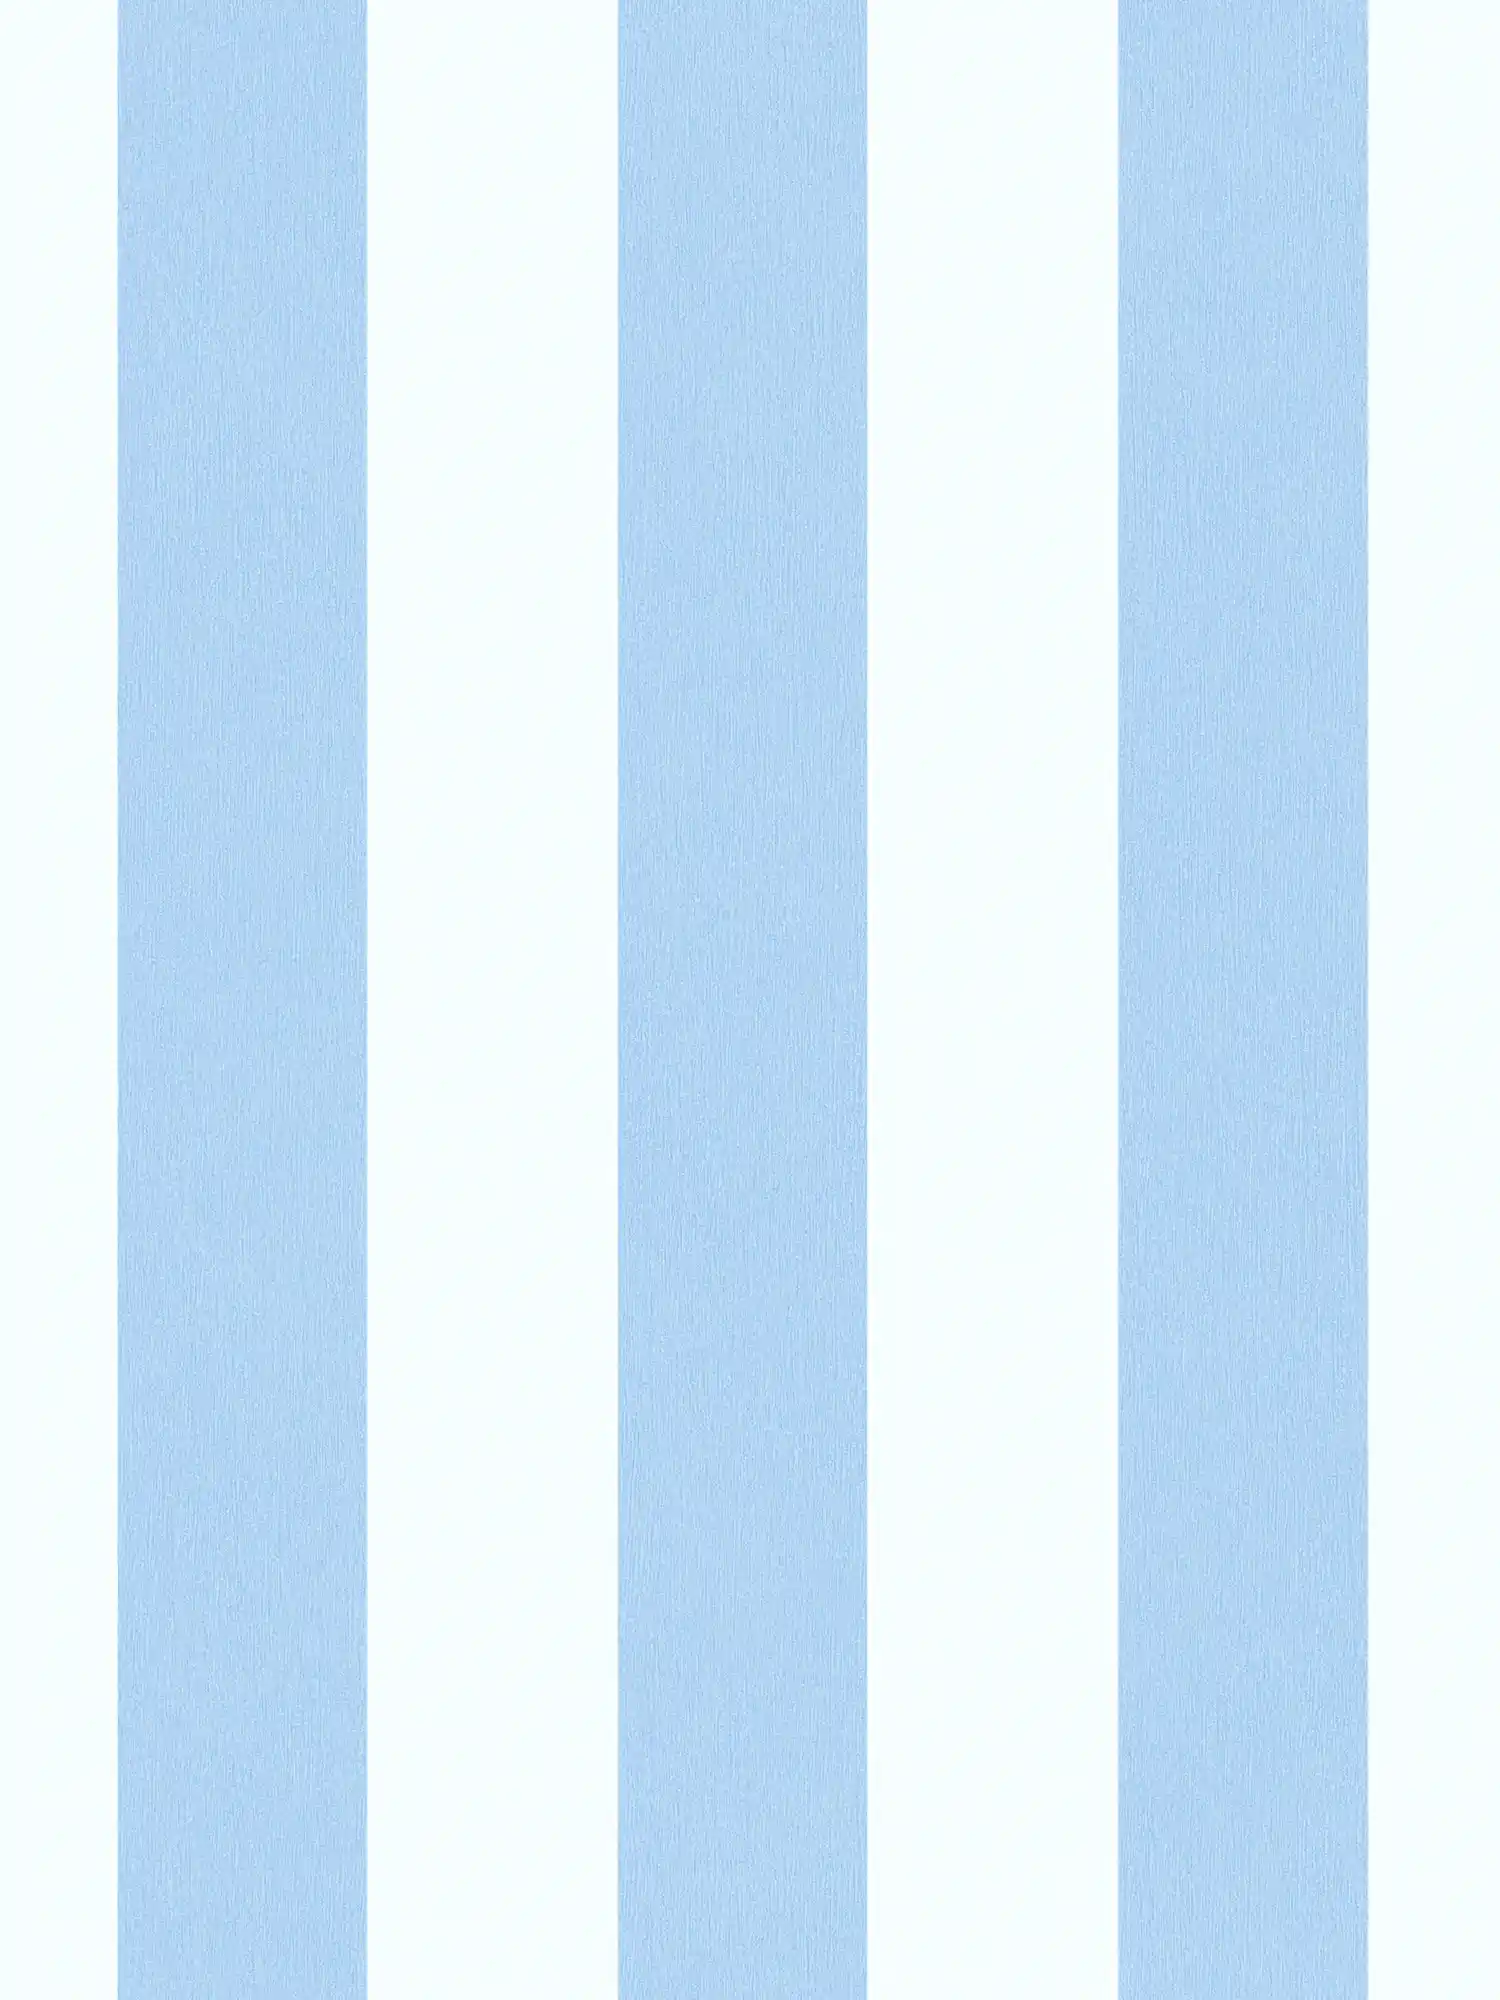 Wallpaper nursery boy vertical stripes - blue, white
